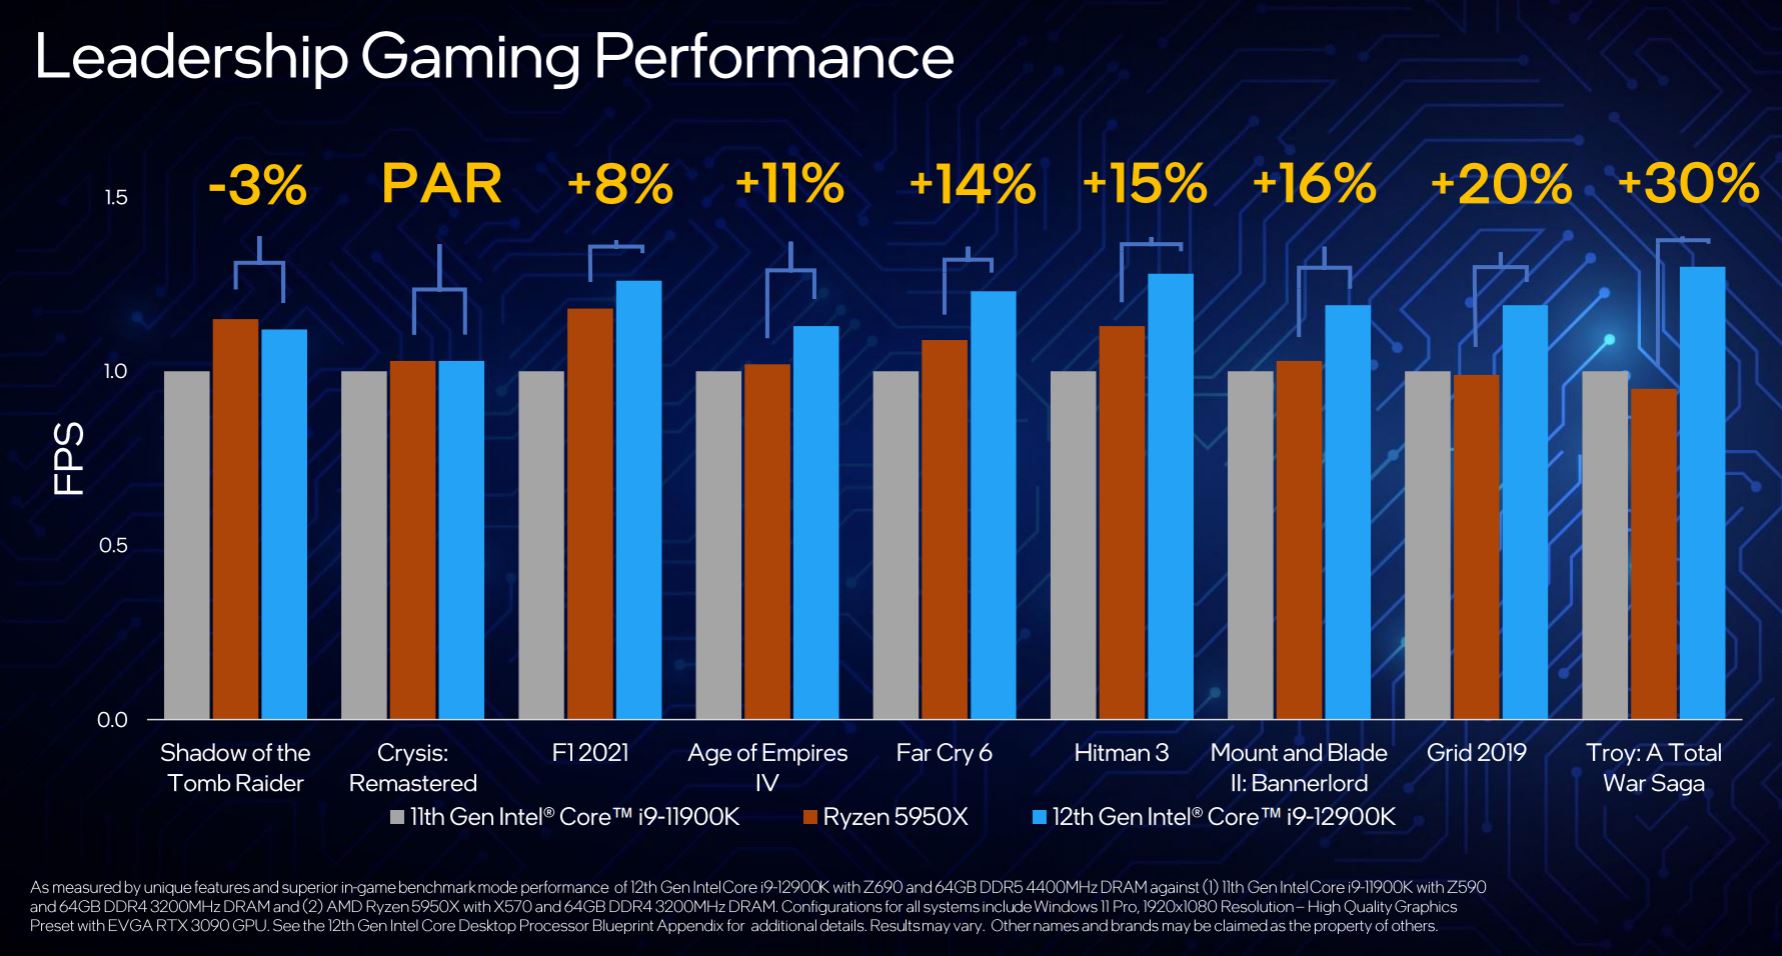 Intel Releases Specs, Performance Data on Upcoming Alder Lake Core i9-12900K